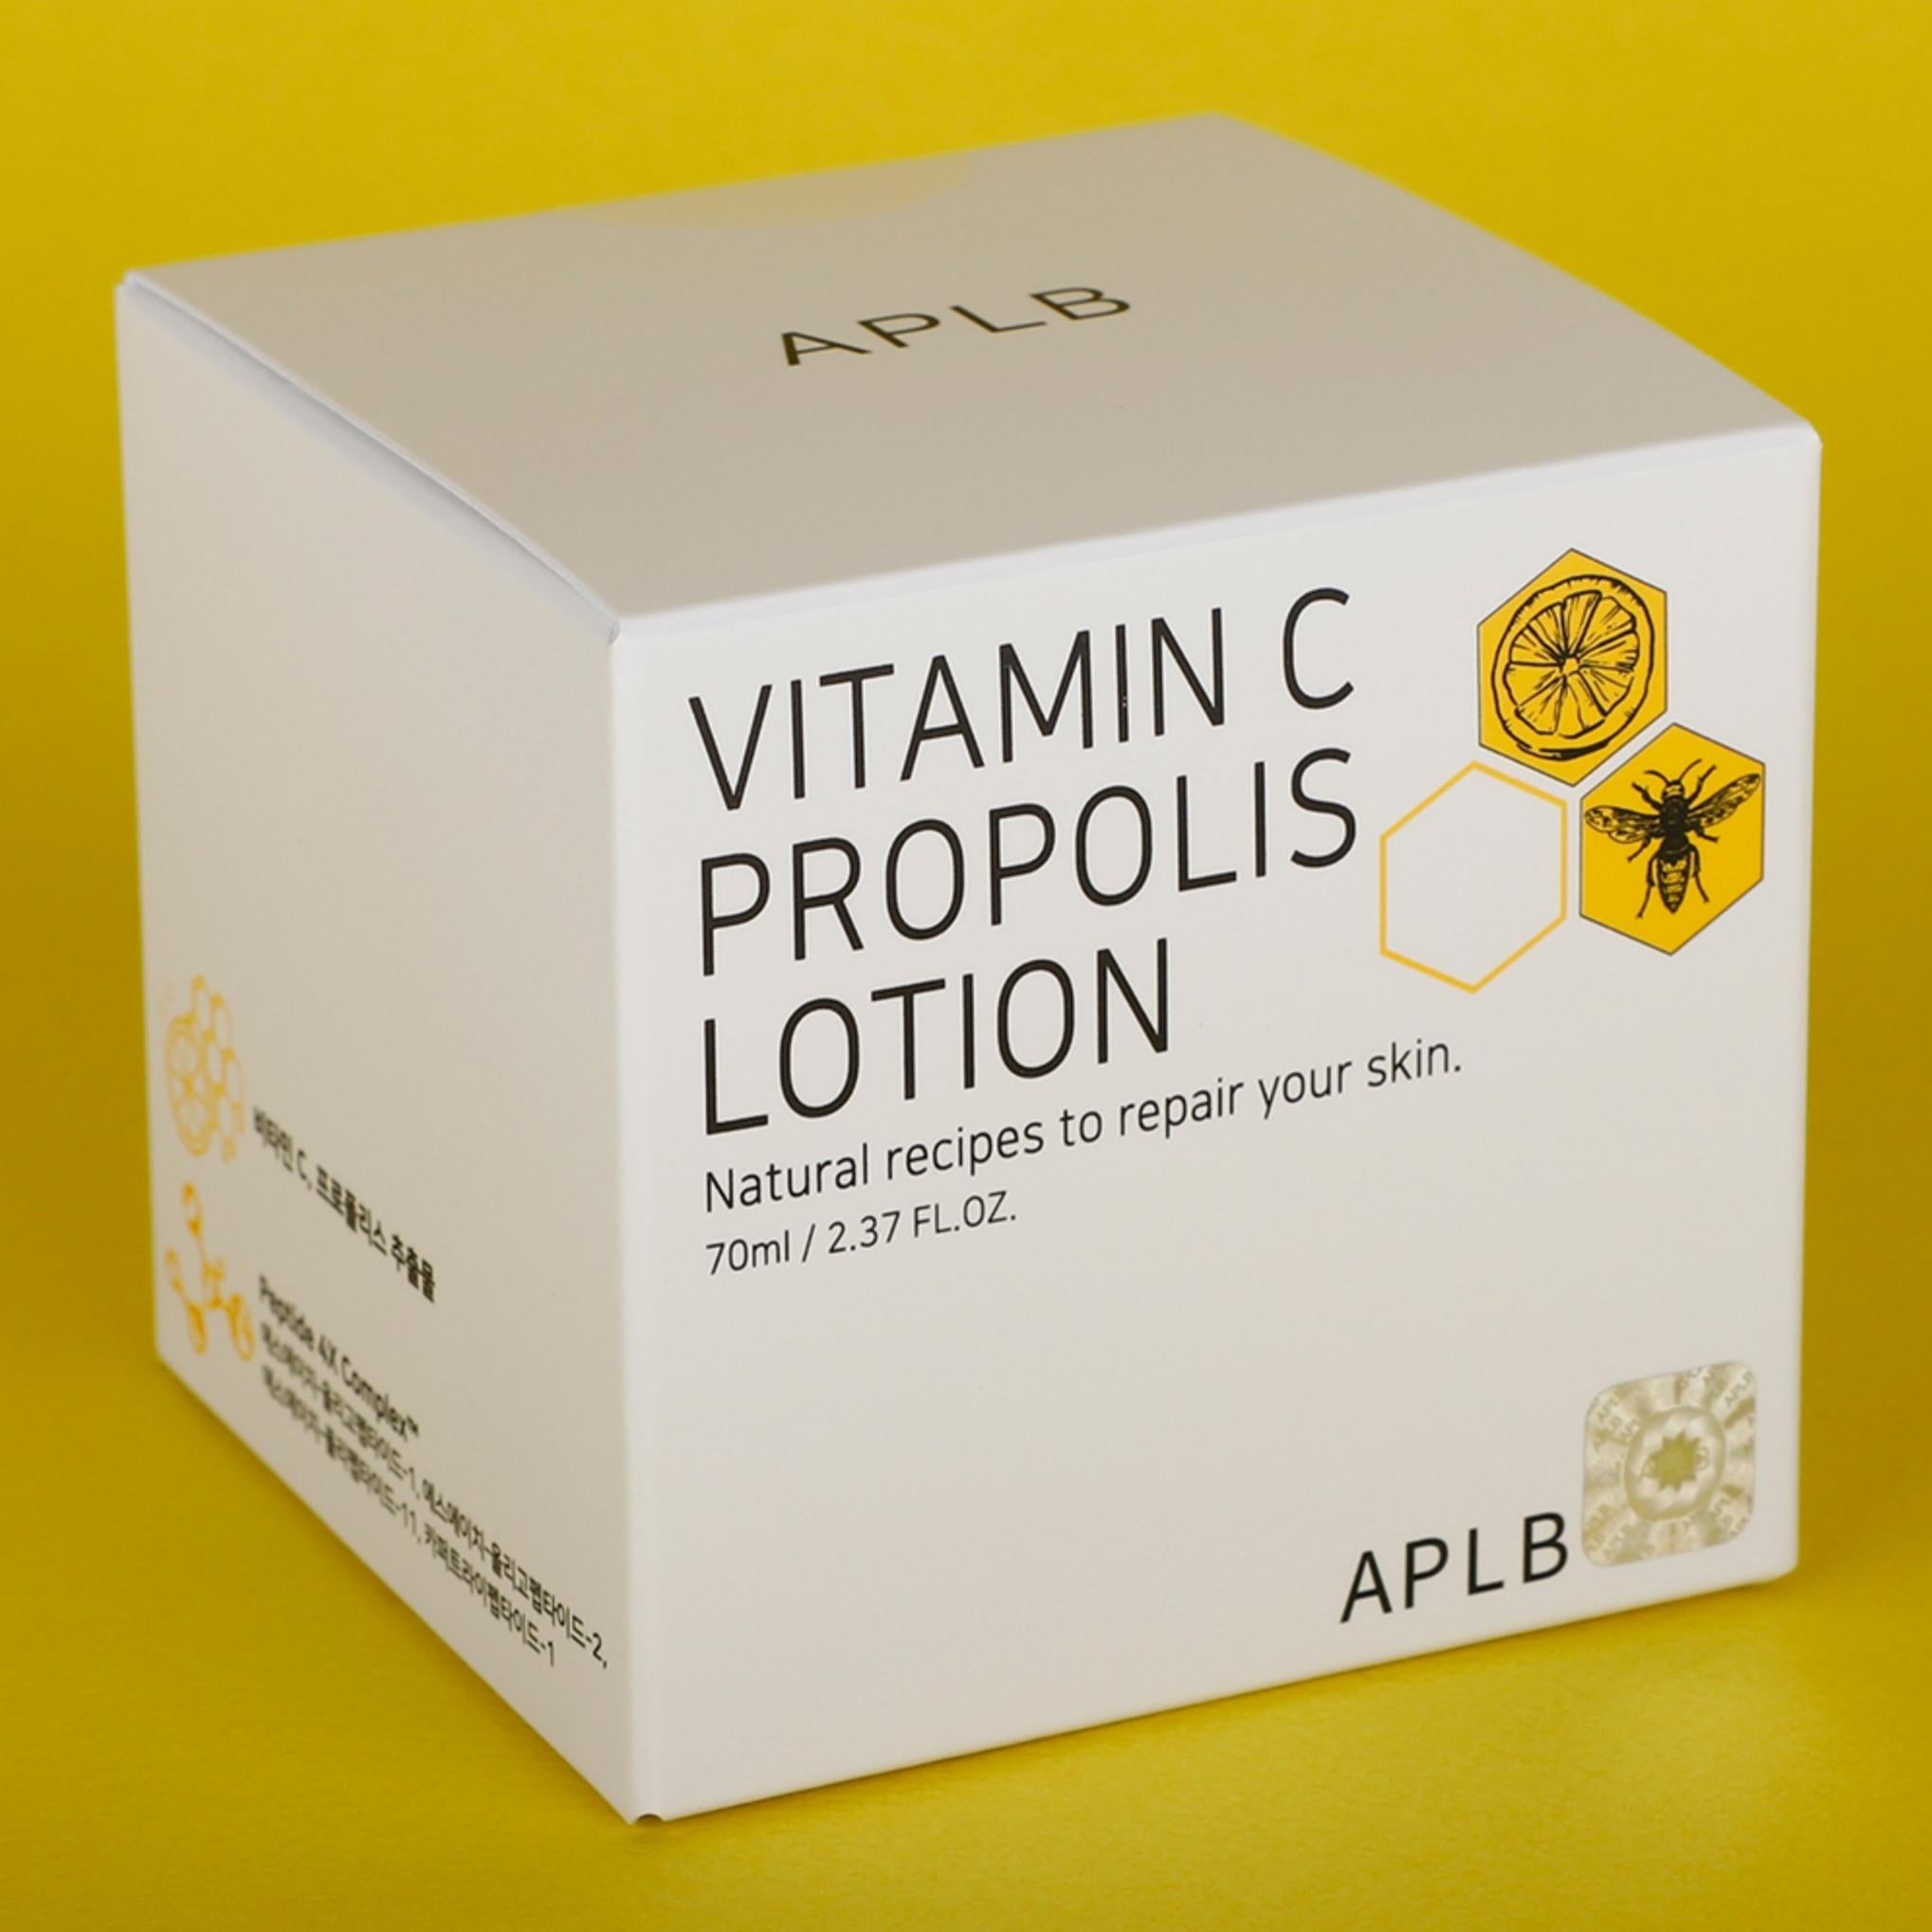 ApleB Vitamin C Propolis Moist Lotion